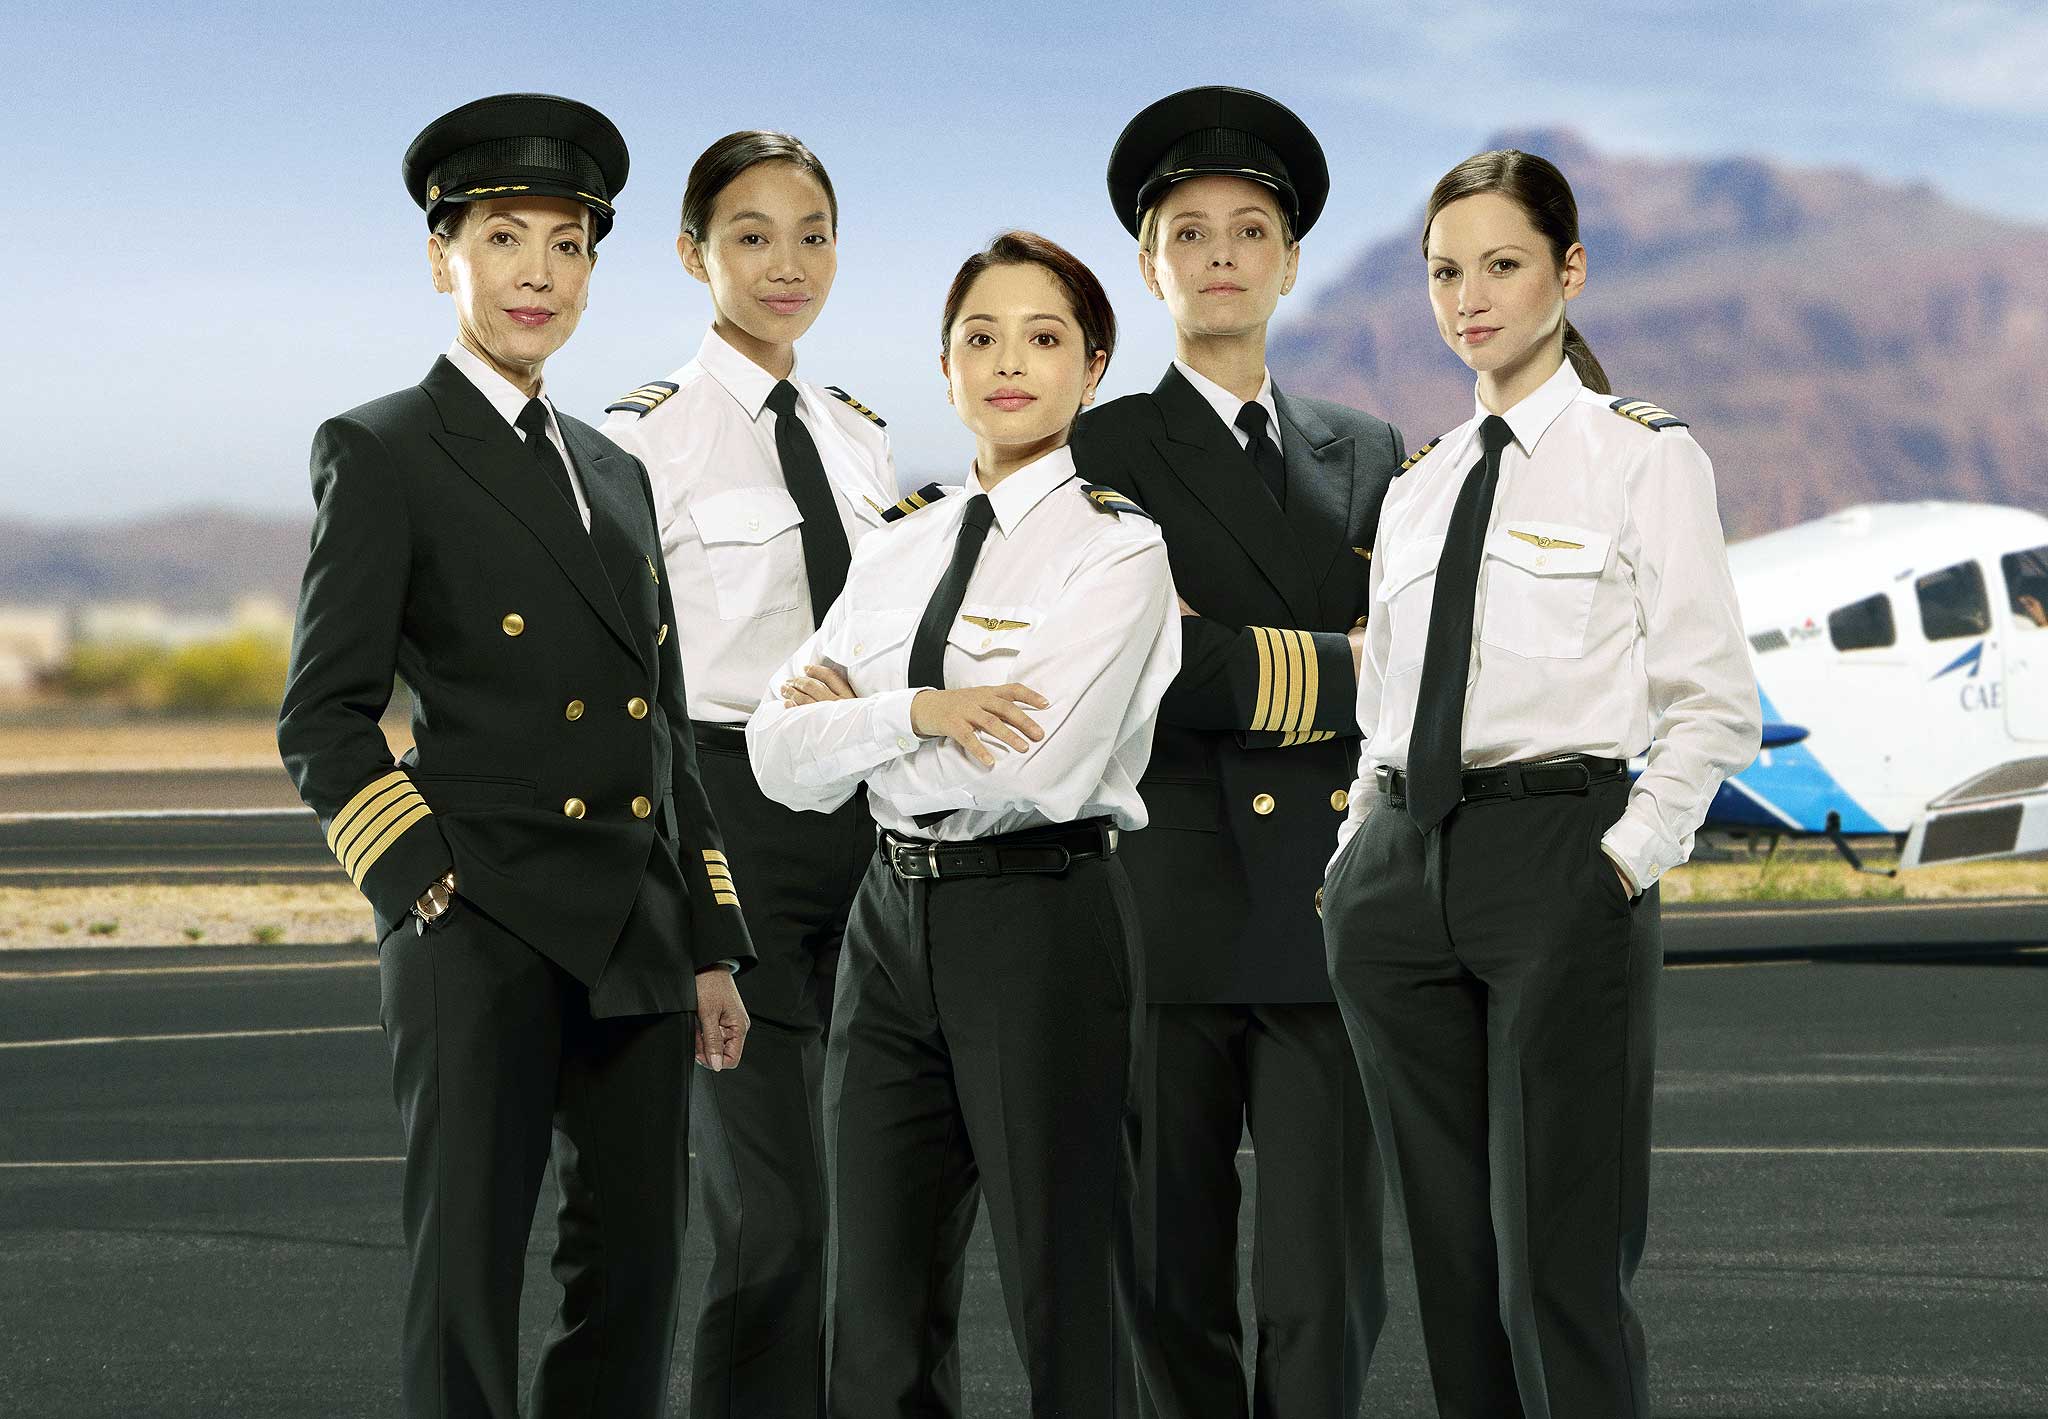 CAE women in flight pilot scholarships